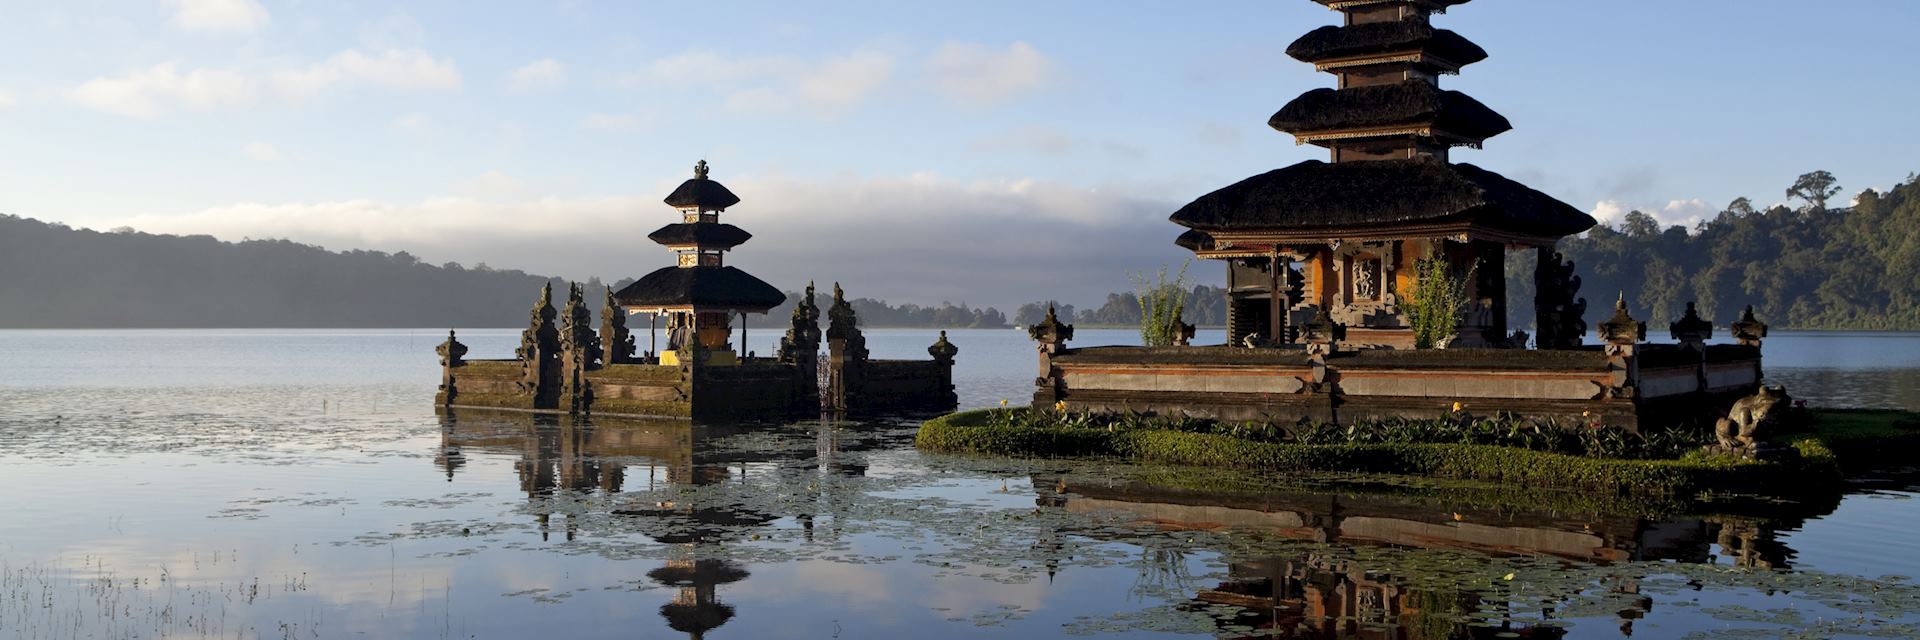 Pura Ulun Danu Bratan temple, Lake Bratan, Bali